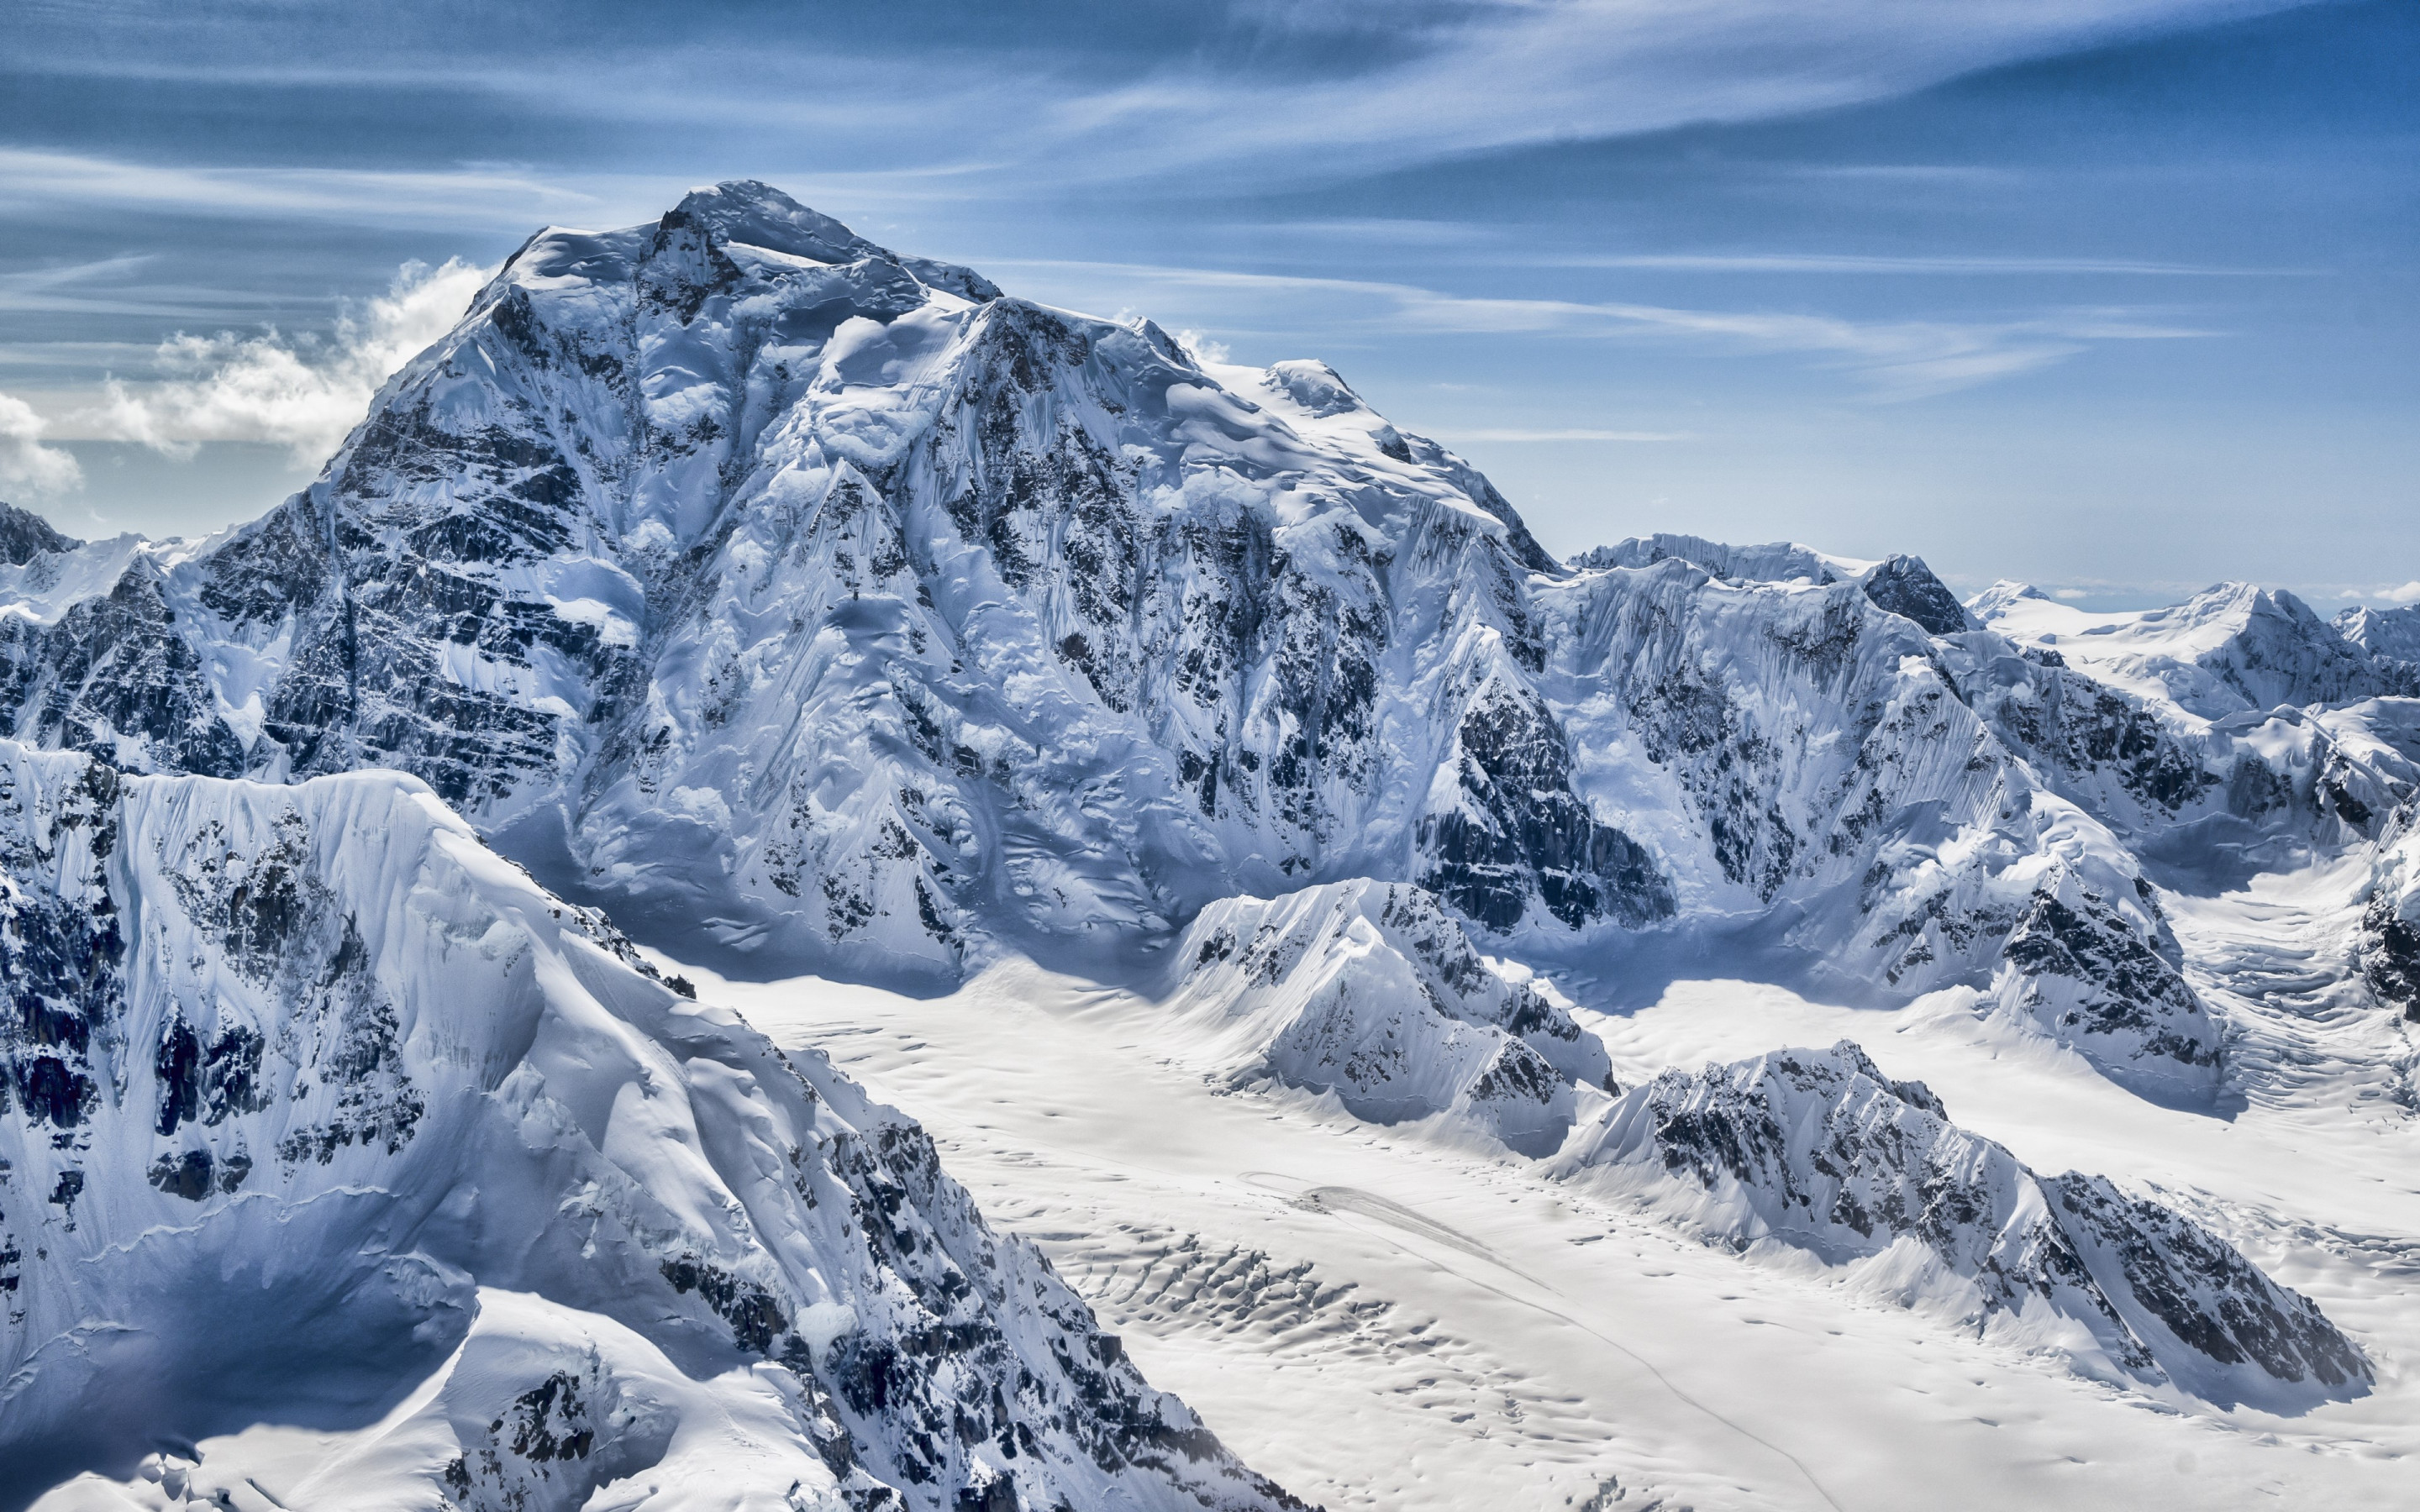 Mountain peak from Alaska wallpaper 2880x1800